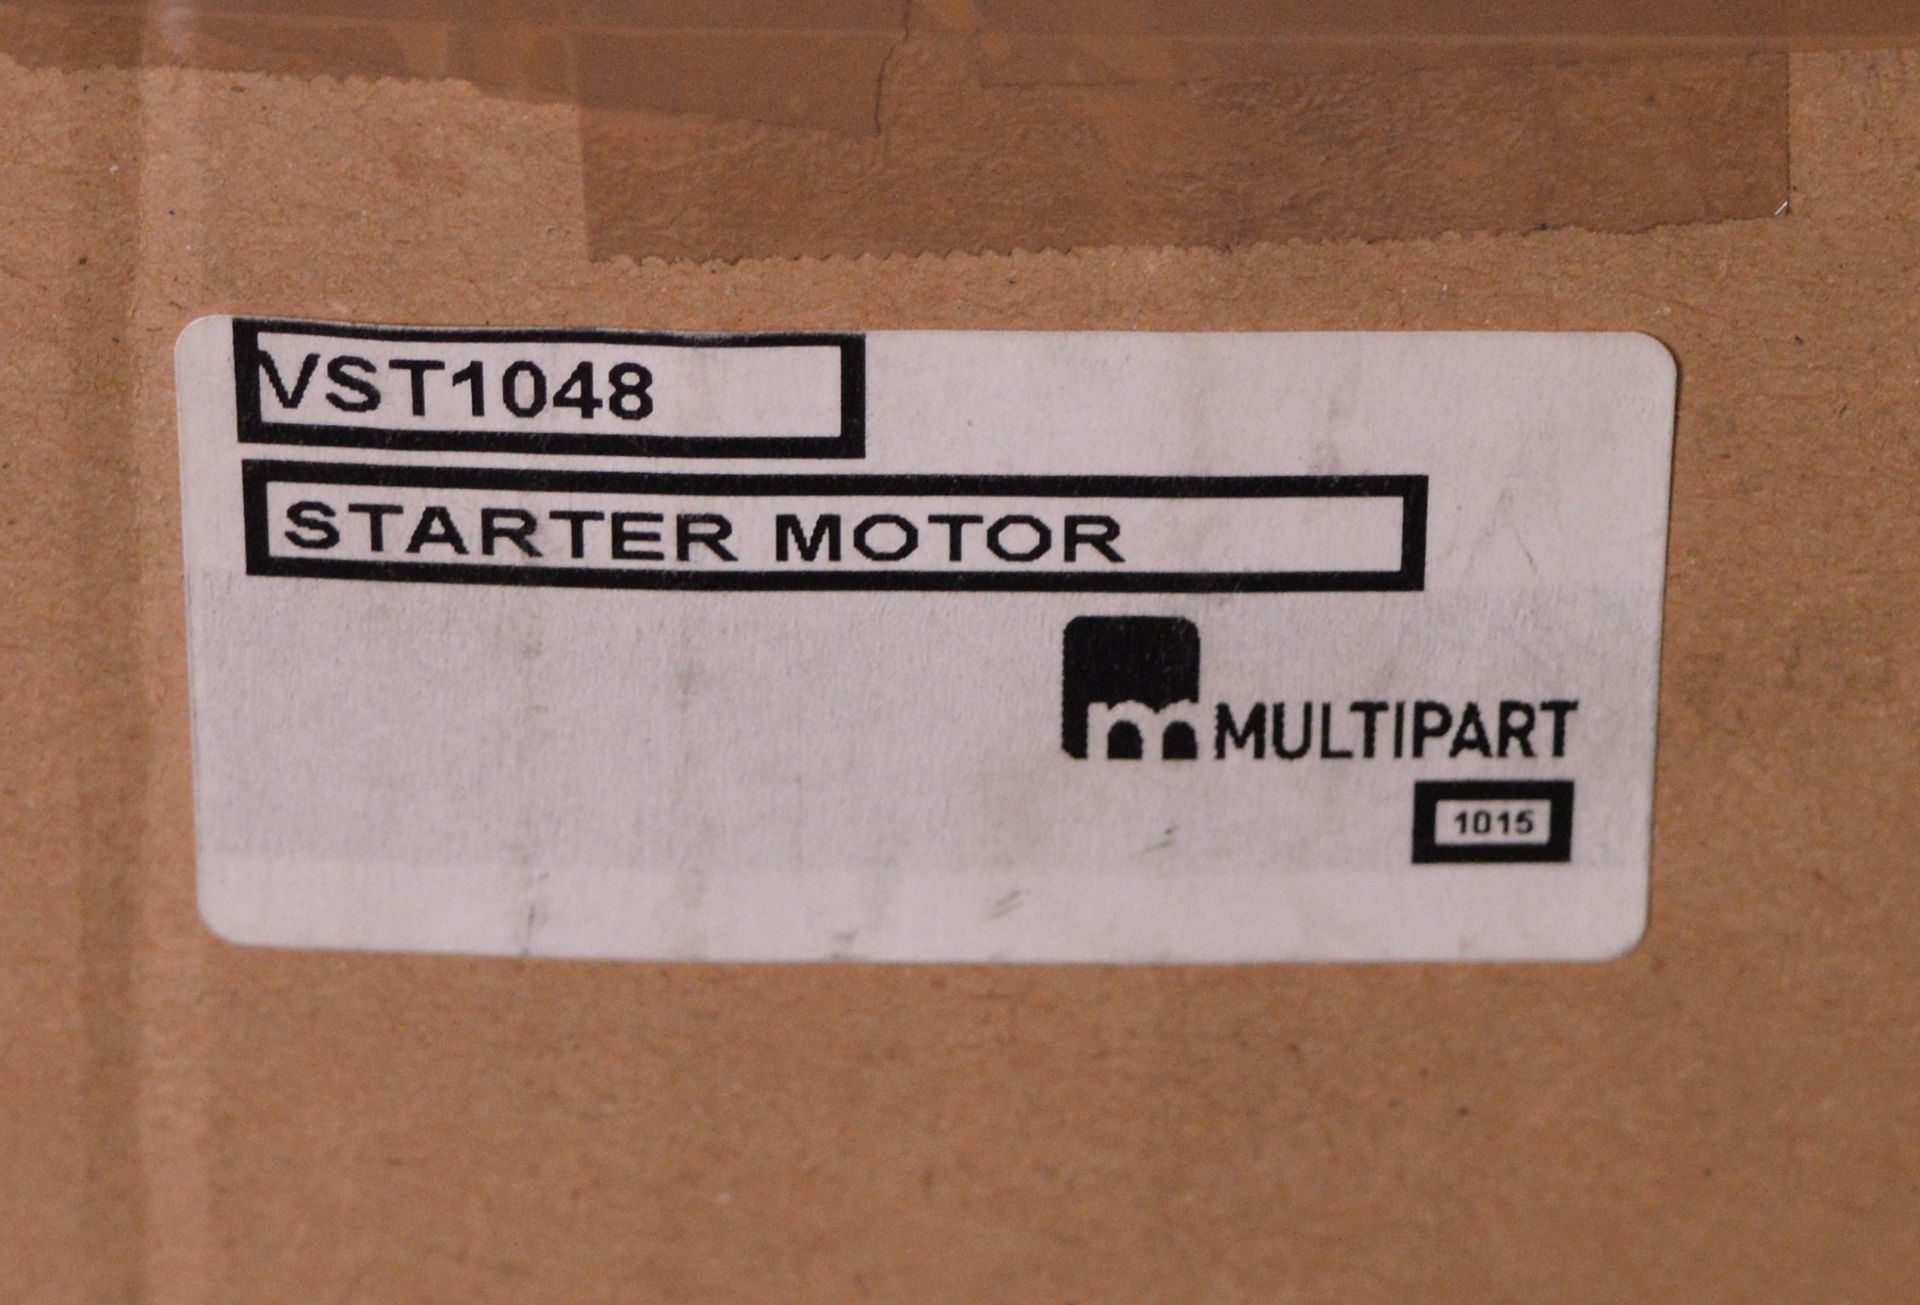 Multipart starter motor VST1048 - Image 3 of 3